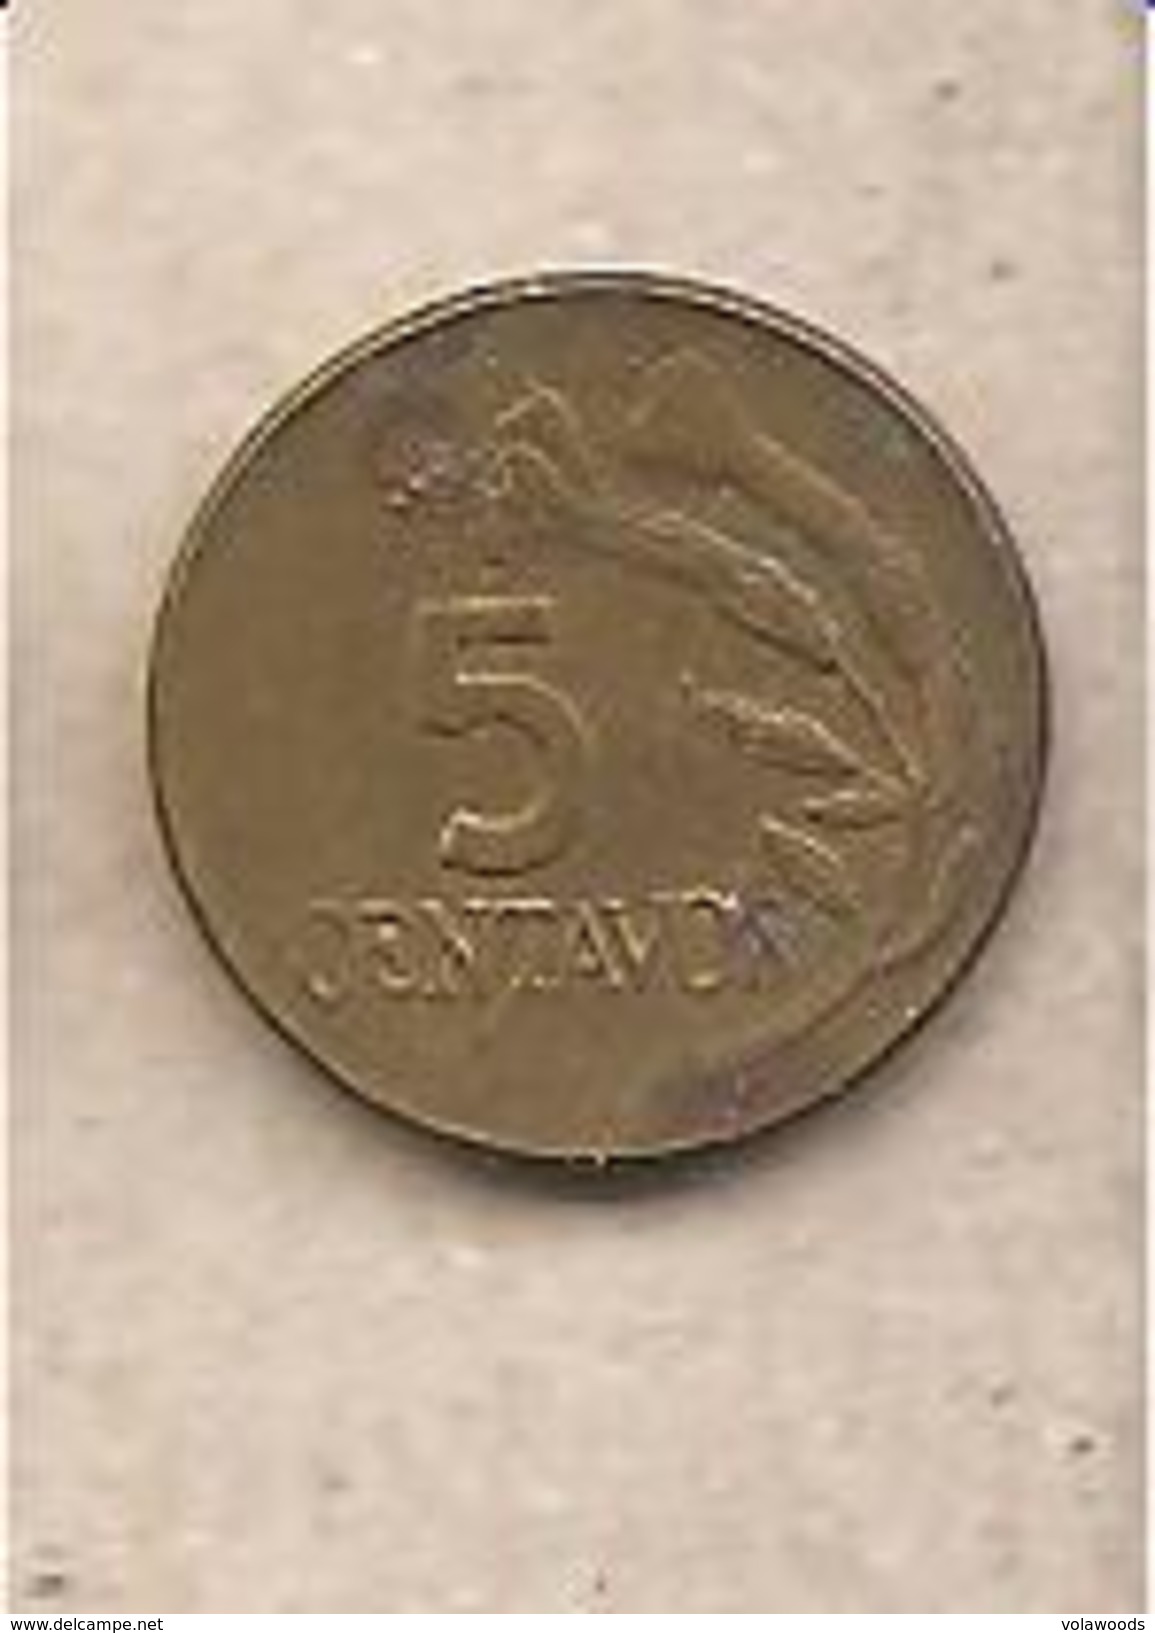 Perù - Moneta Circolata Da 5 Centesimi - 1973 - Perú